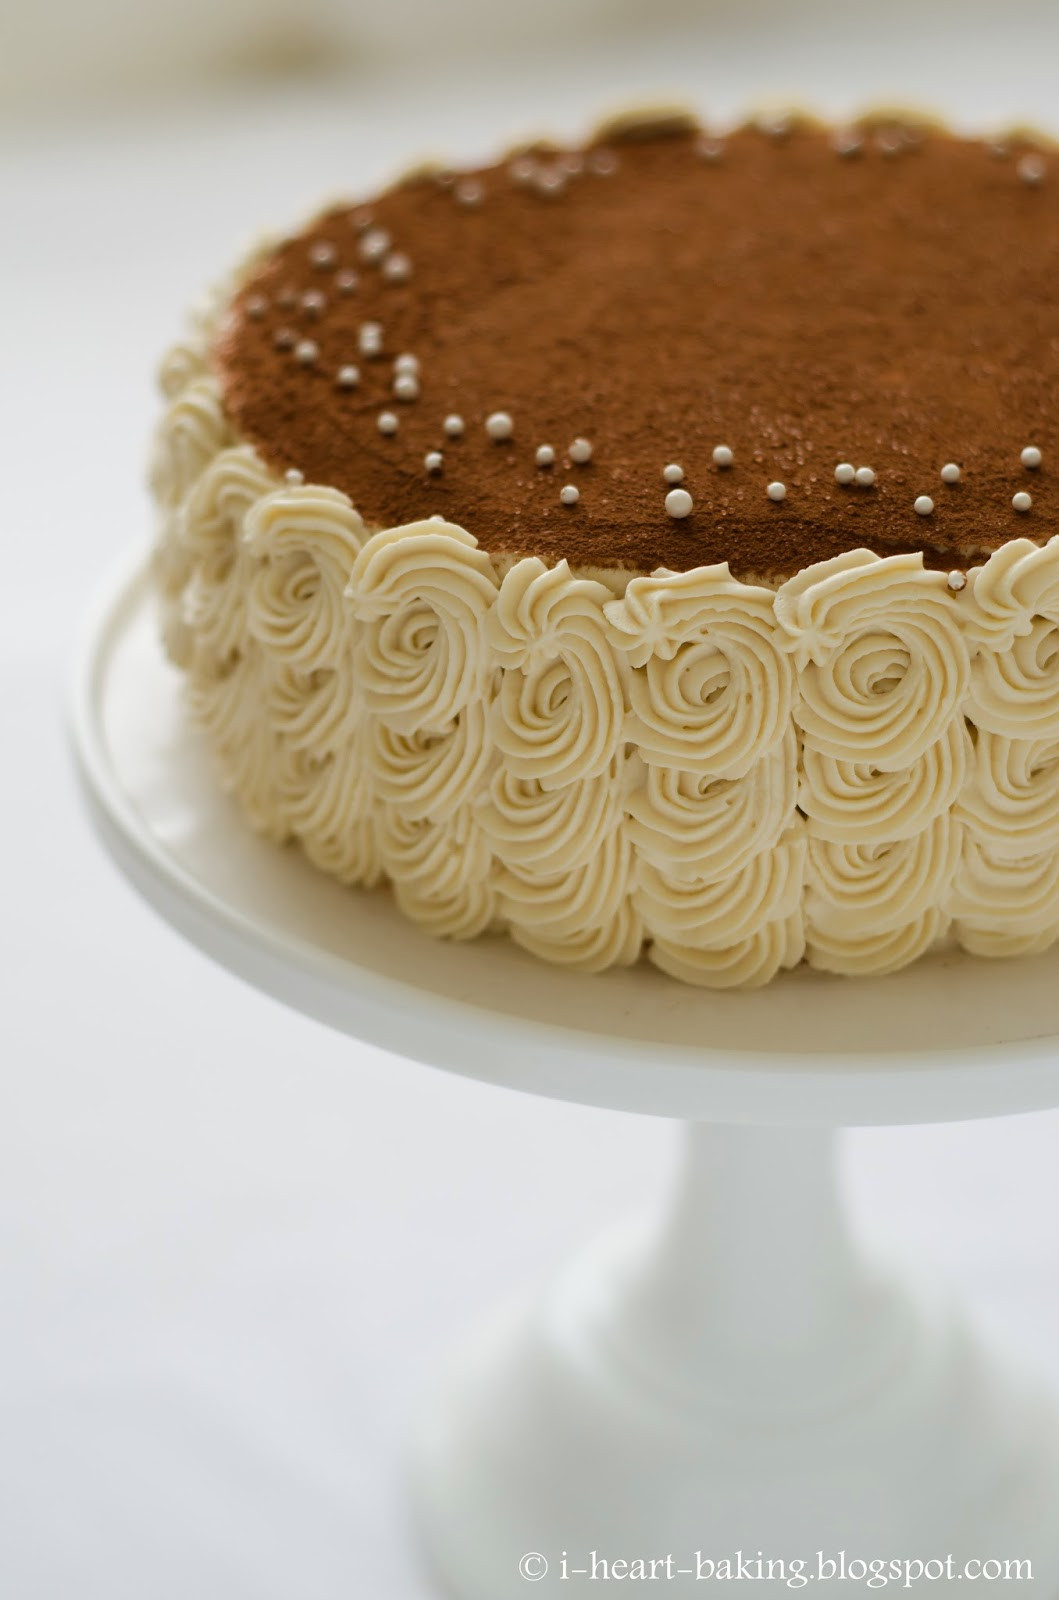 Best ideas about Tiramisu Birthday Cake
. Save or Pin i heart baking tiramisu birthday cake with piped swirl Now.